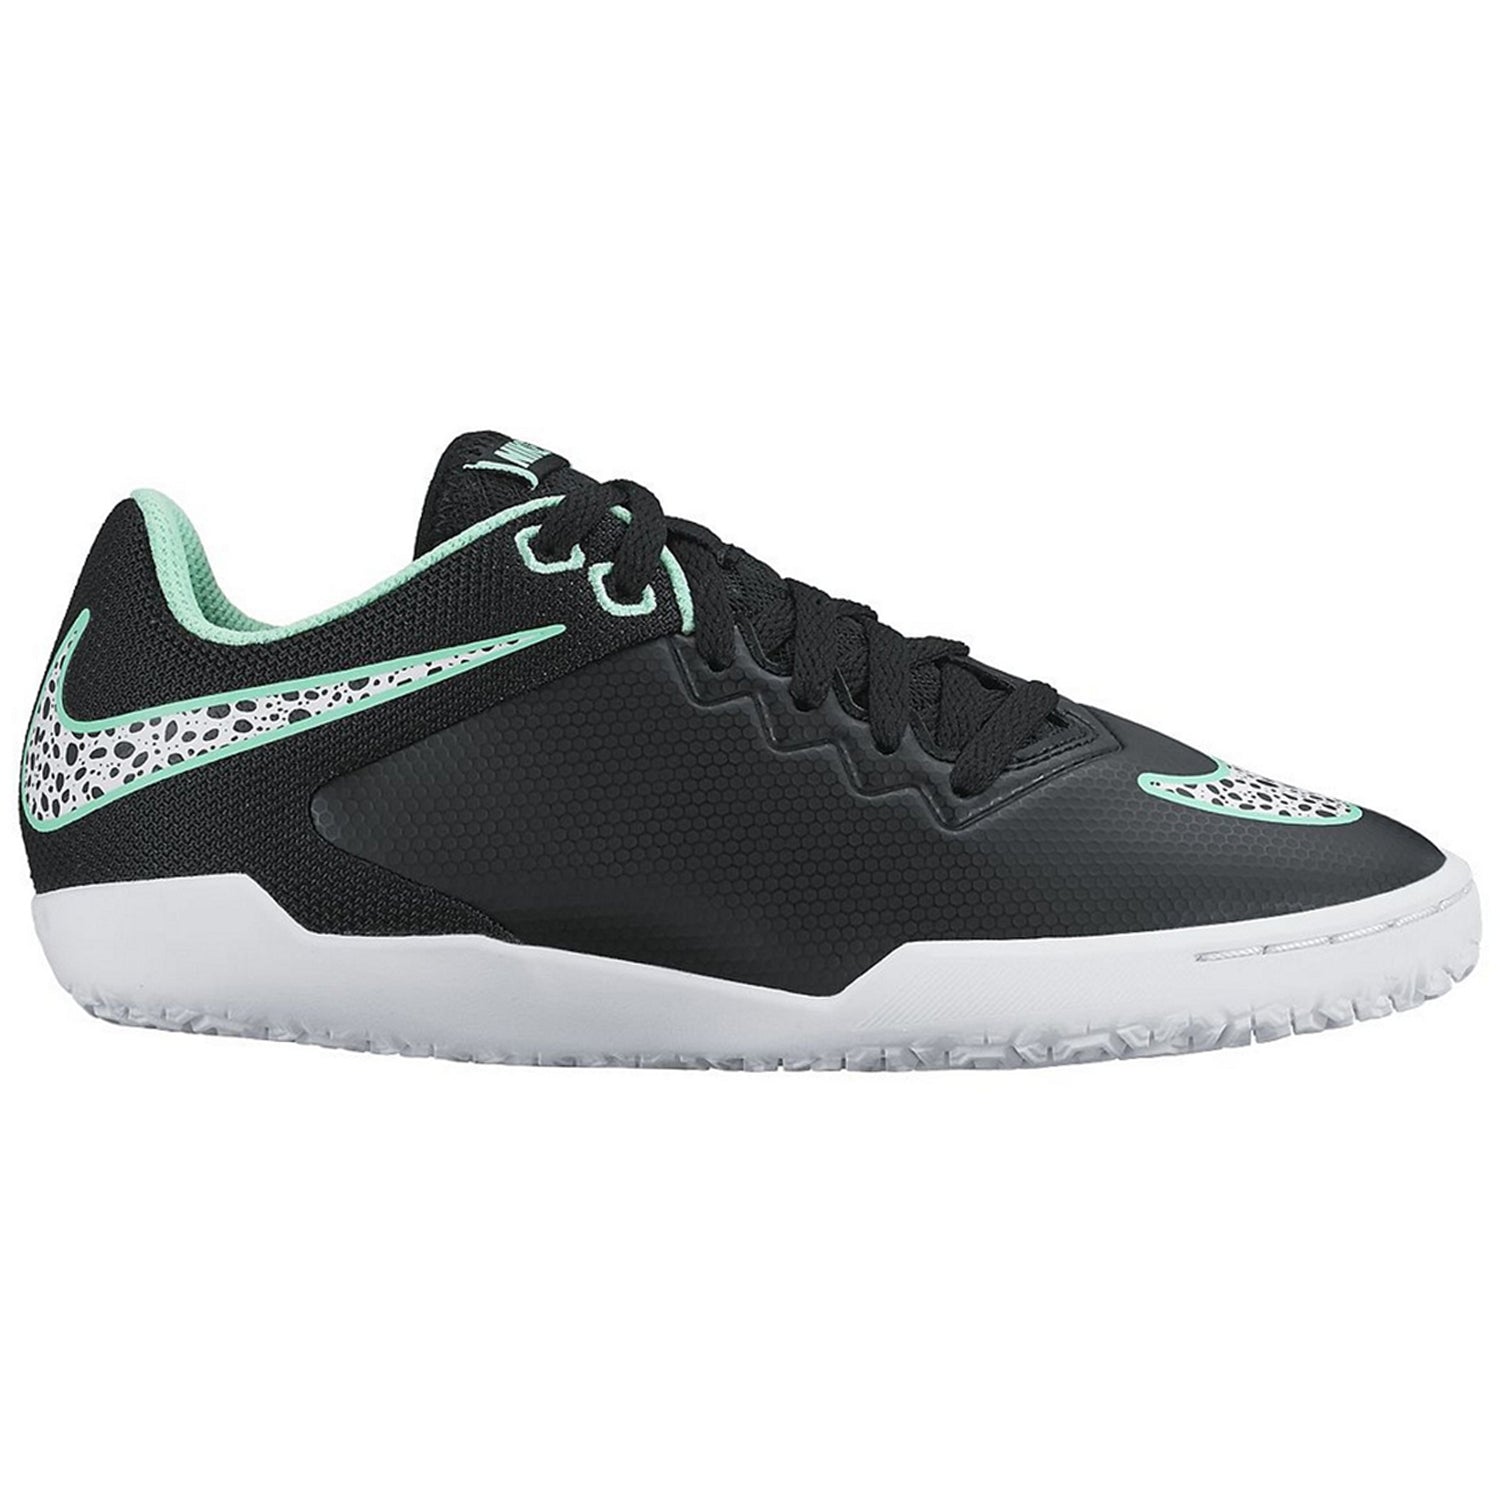 Nike HypervenomX Pro IC Black Green Glow (GS)